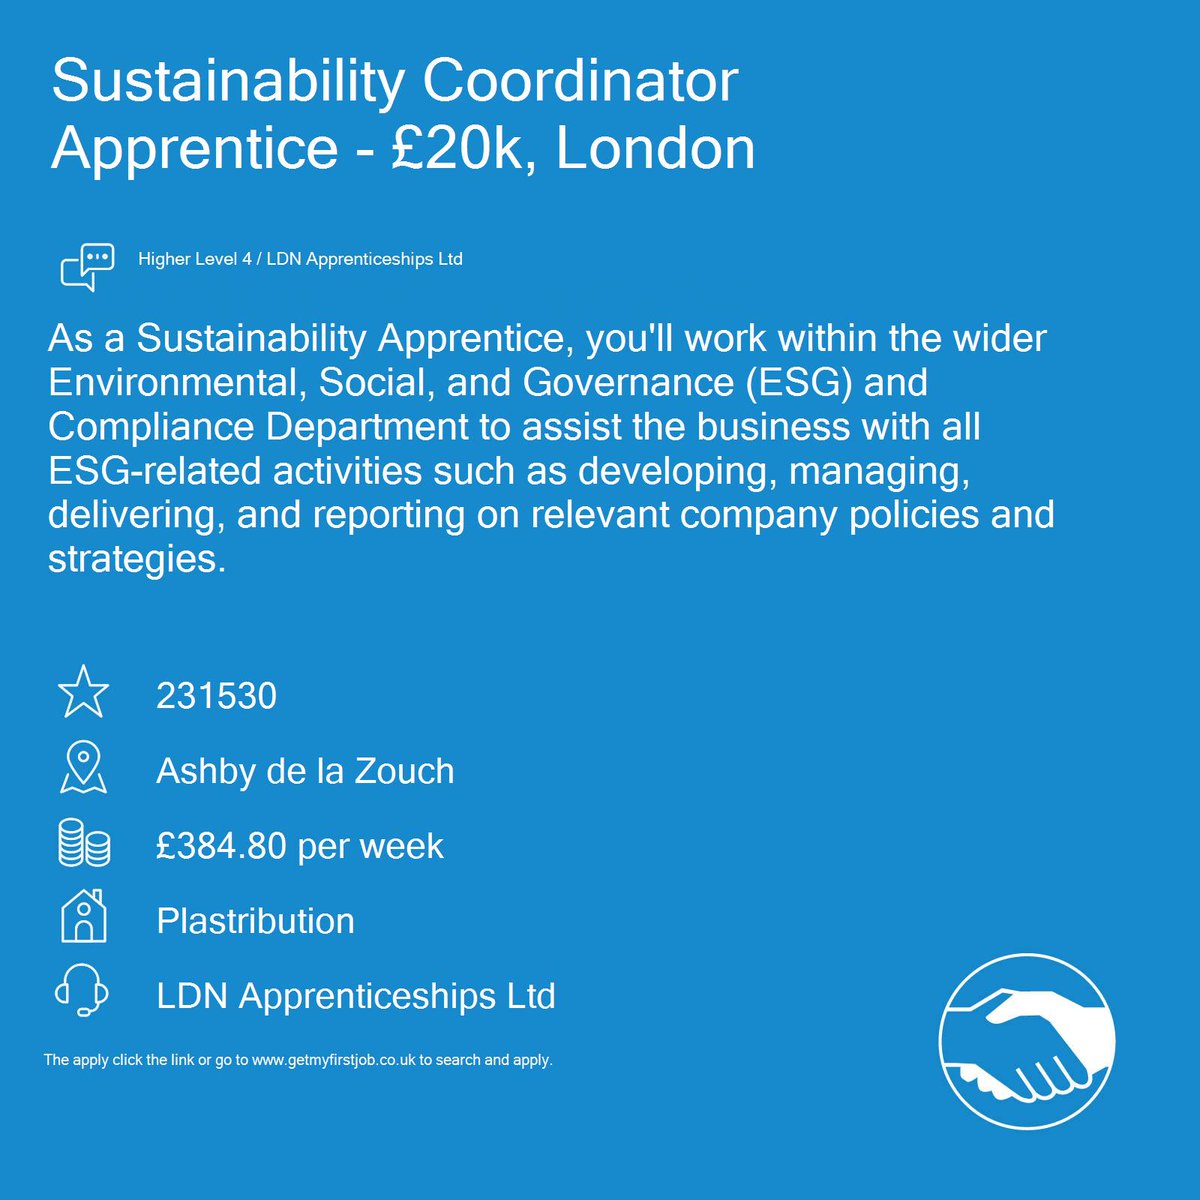 Get into #EnvironmentalSciences as a Sustainability Coordinator #apprentice - £20k, London in #AshbydelaZouch @GetMyFirstJob #LDNApprenticeshipsLtd #Plastribution 👉 getmyfirstjob.co.uk/search/details…£20k,-london